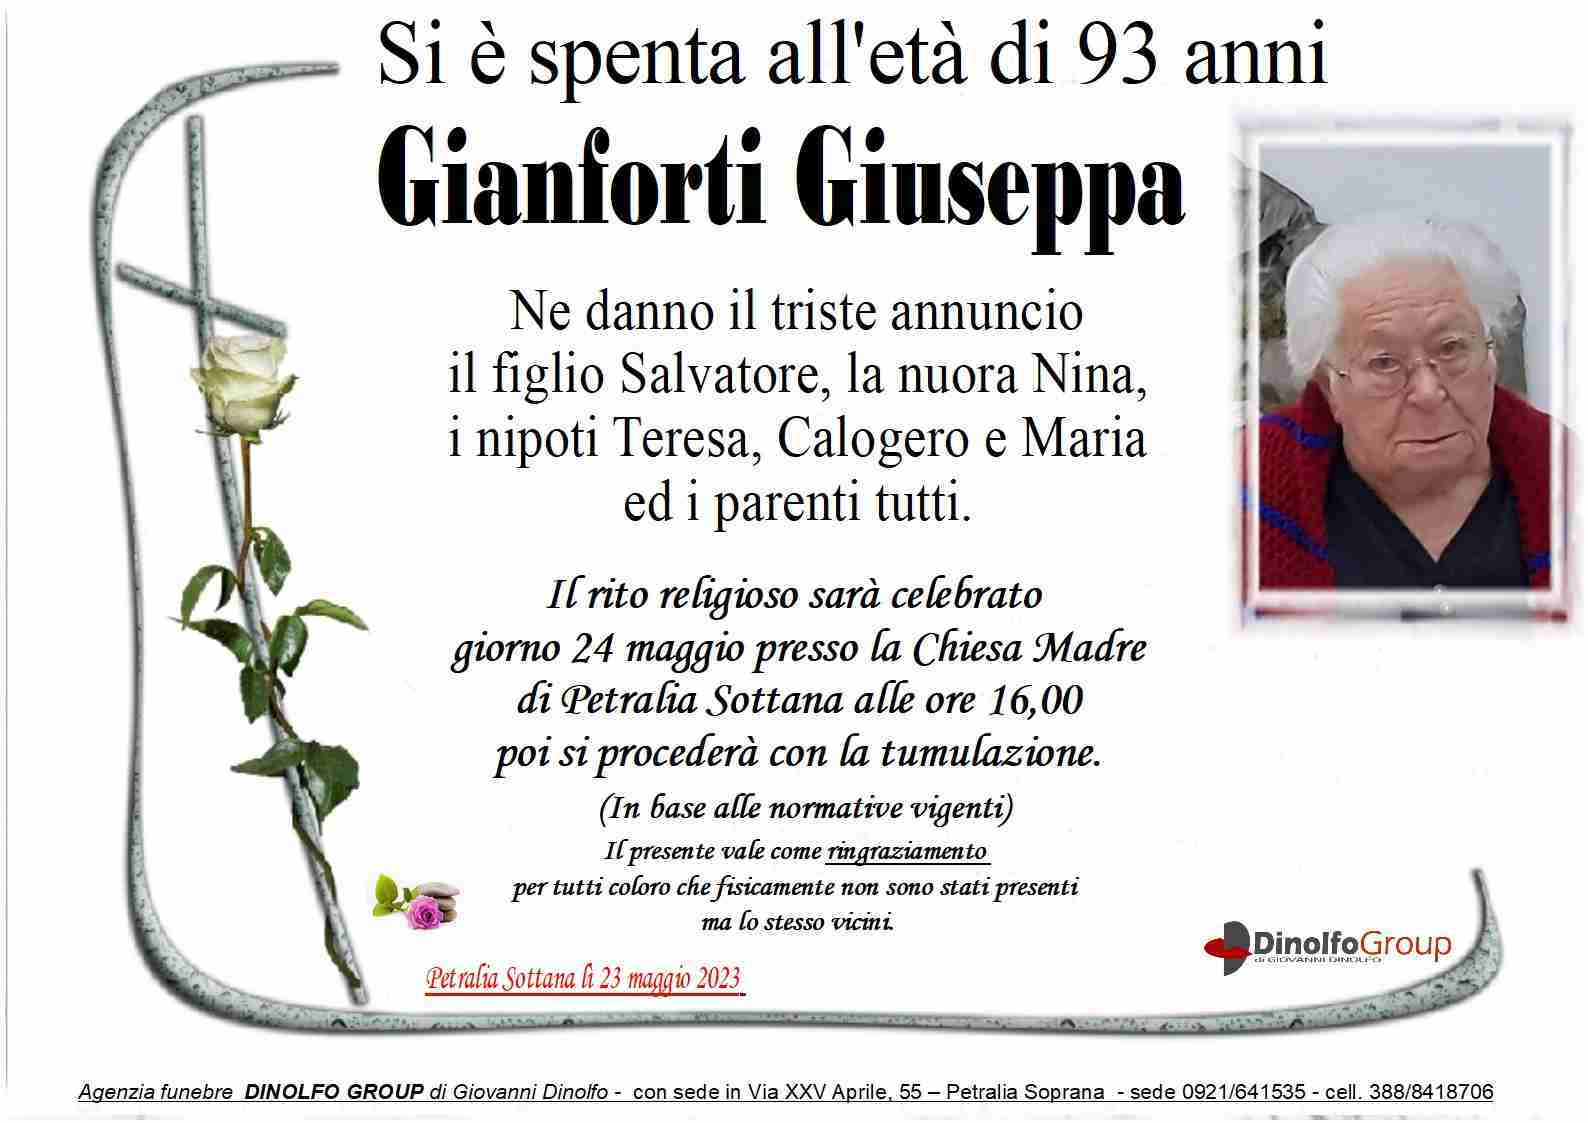 Giuseppa Gianforti